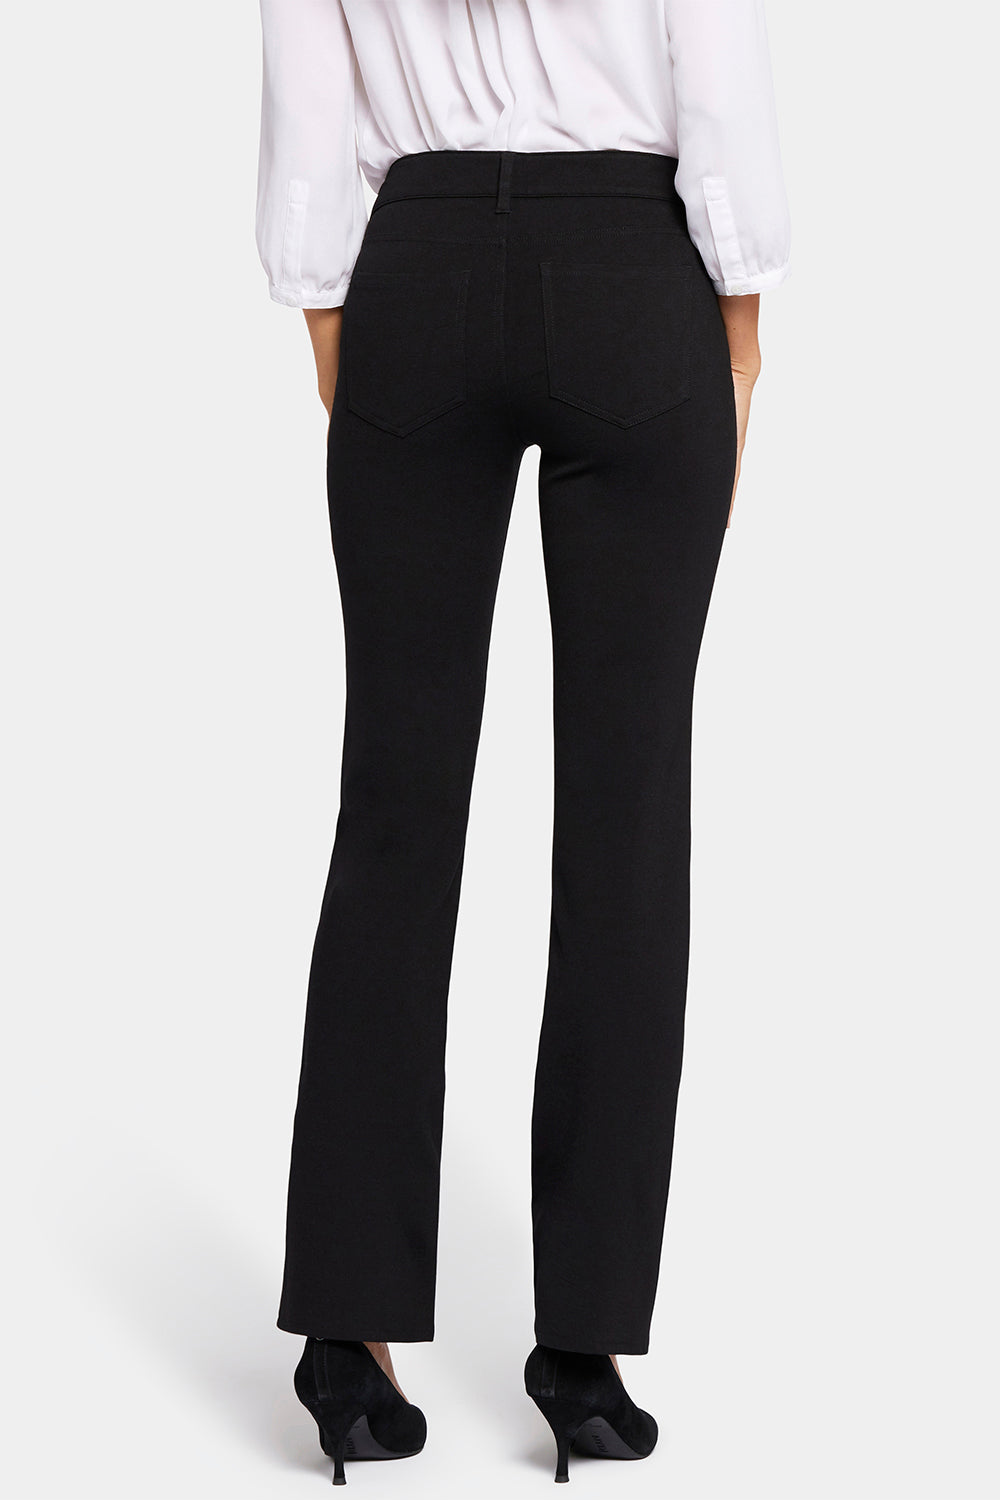 Slim Trouser Pants In Ponte Knit - Charcoal Heathered Grey | NYDJ